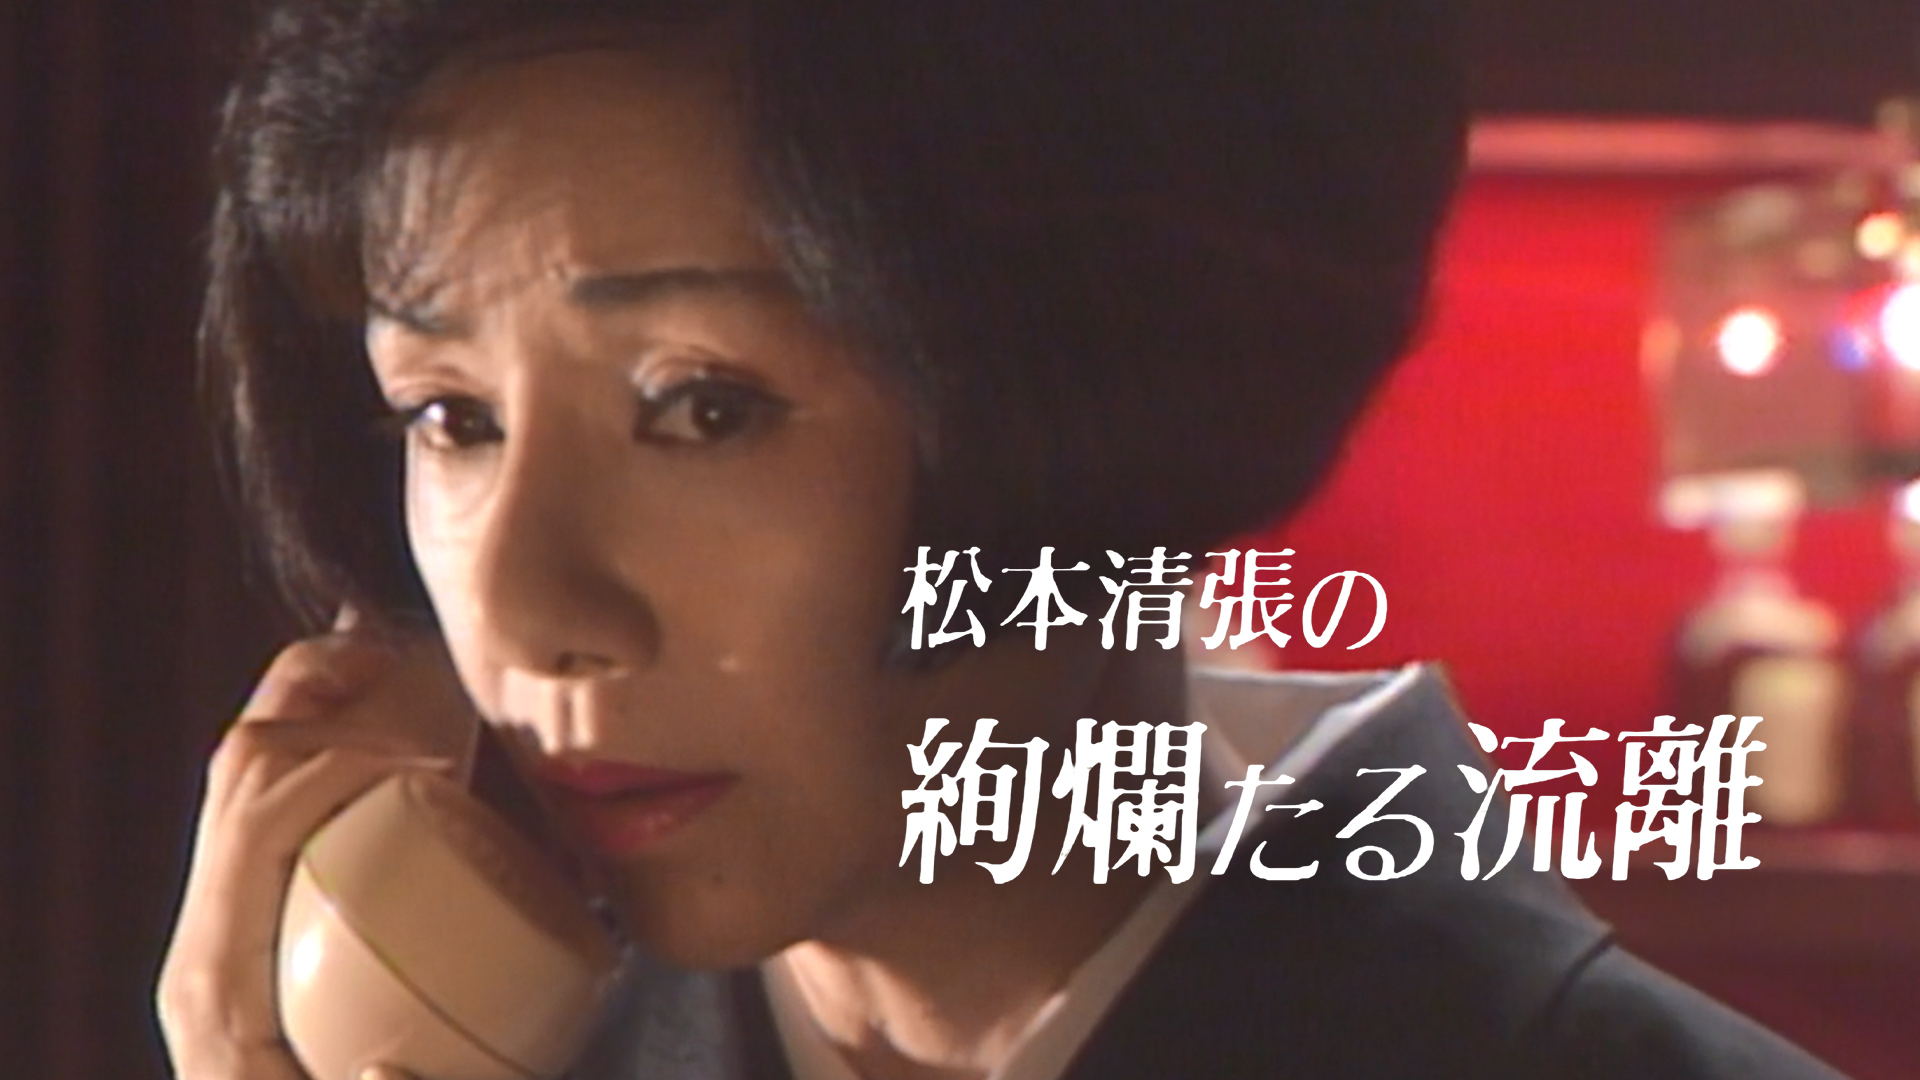 NHK土曜ドラマ 松本清張シリーズ 下巻 DVD 5枚組 - 映像と音の友社 - インディーズ